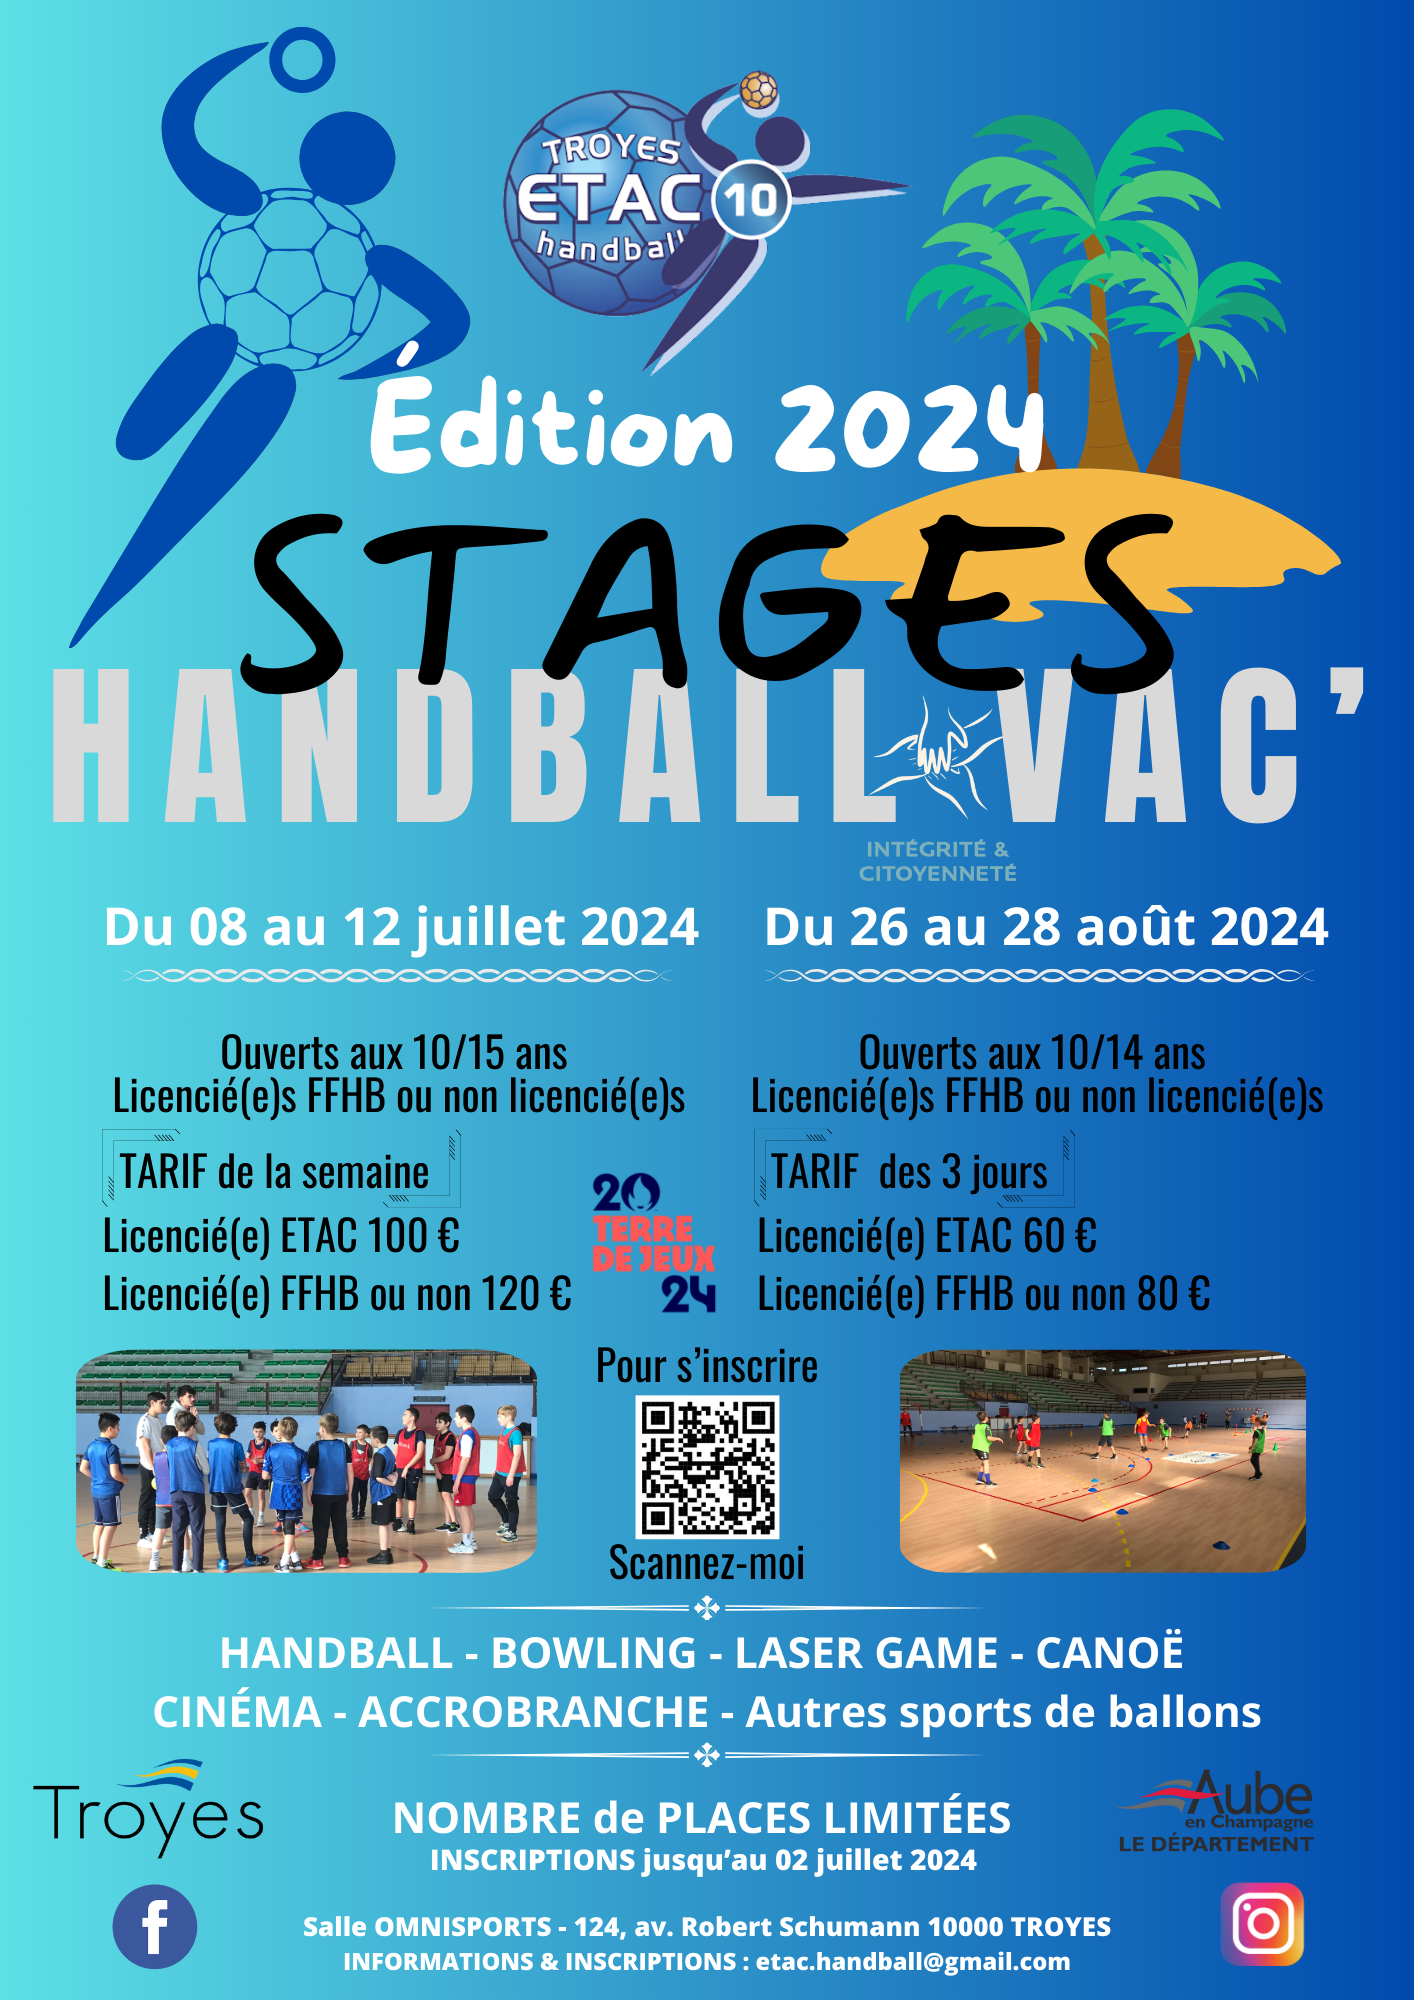 Stages Handball Vac' - Été 2024